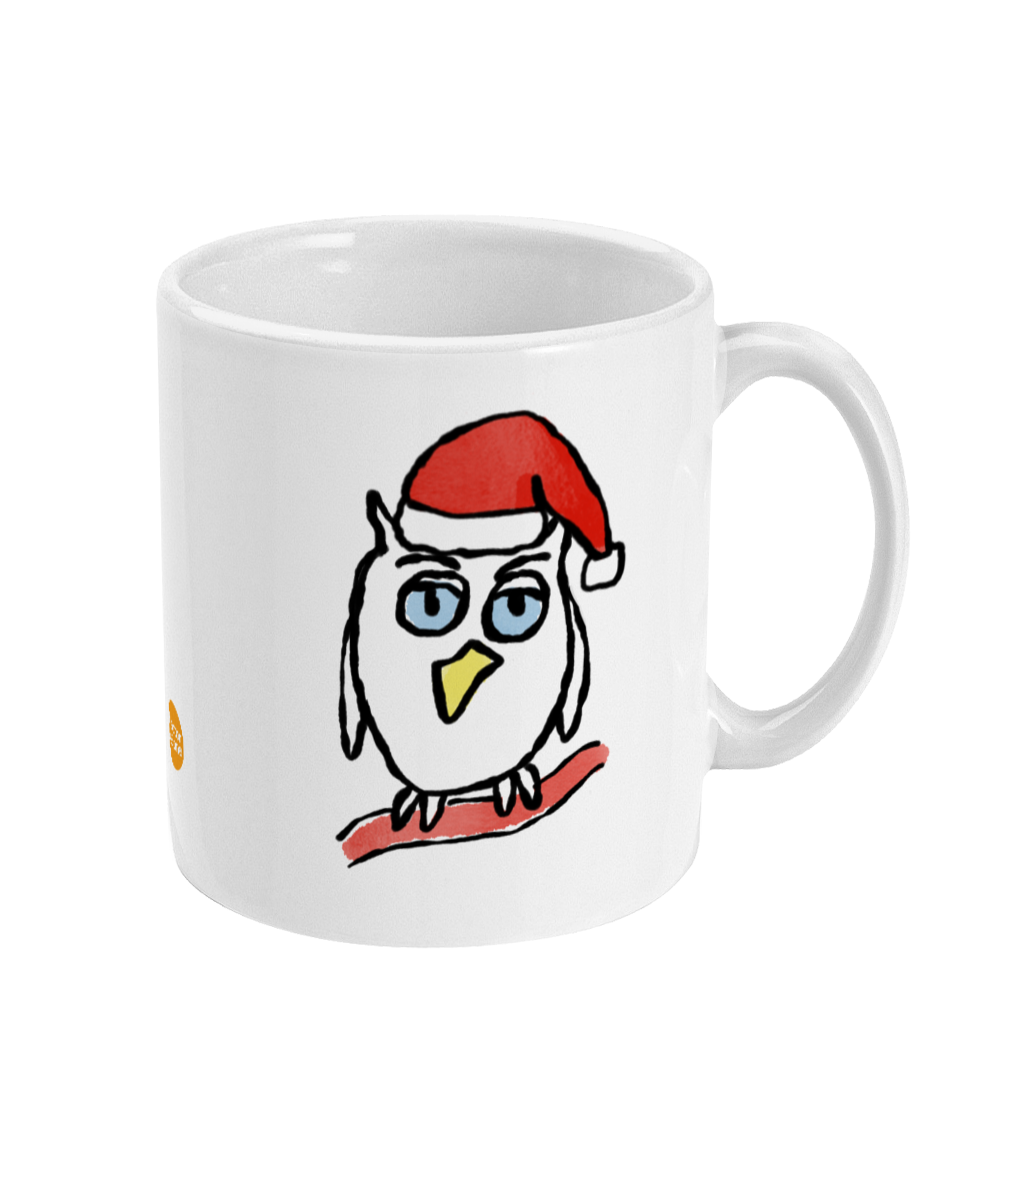 Santa Night Owl Mug - Cute Santa Owl illustrated coffee mug by Hector and Bone Right View